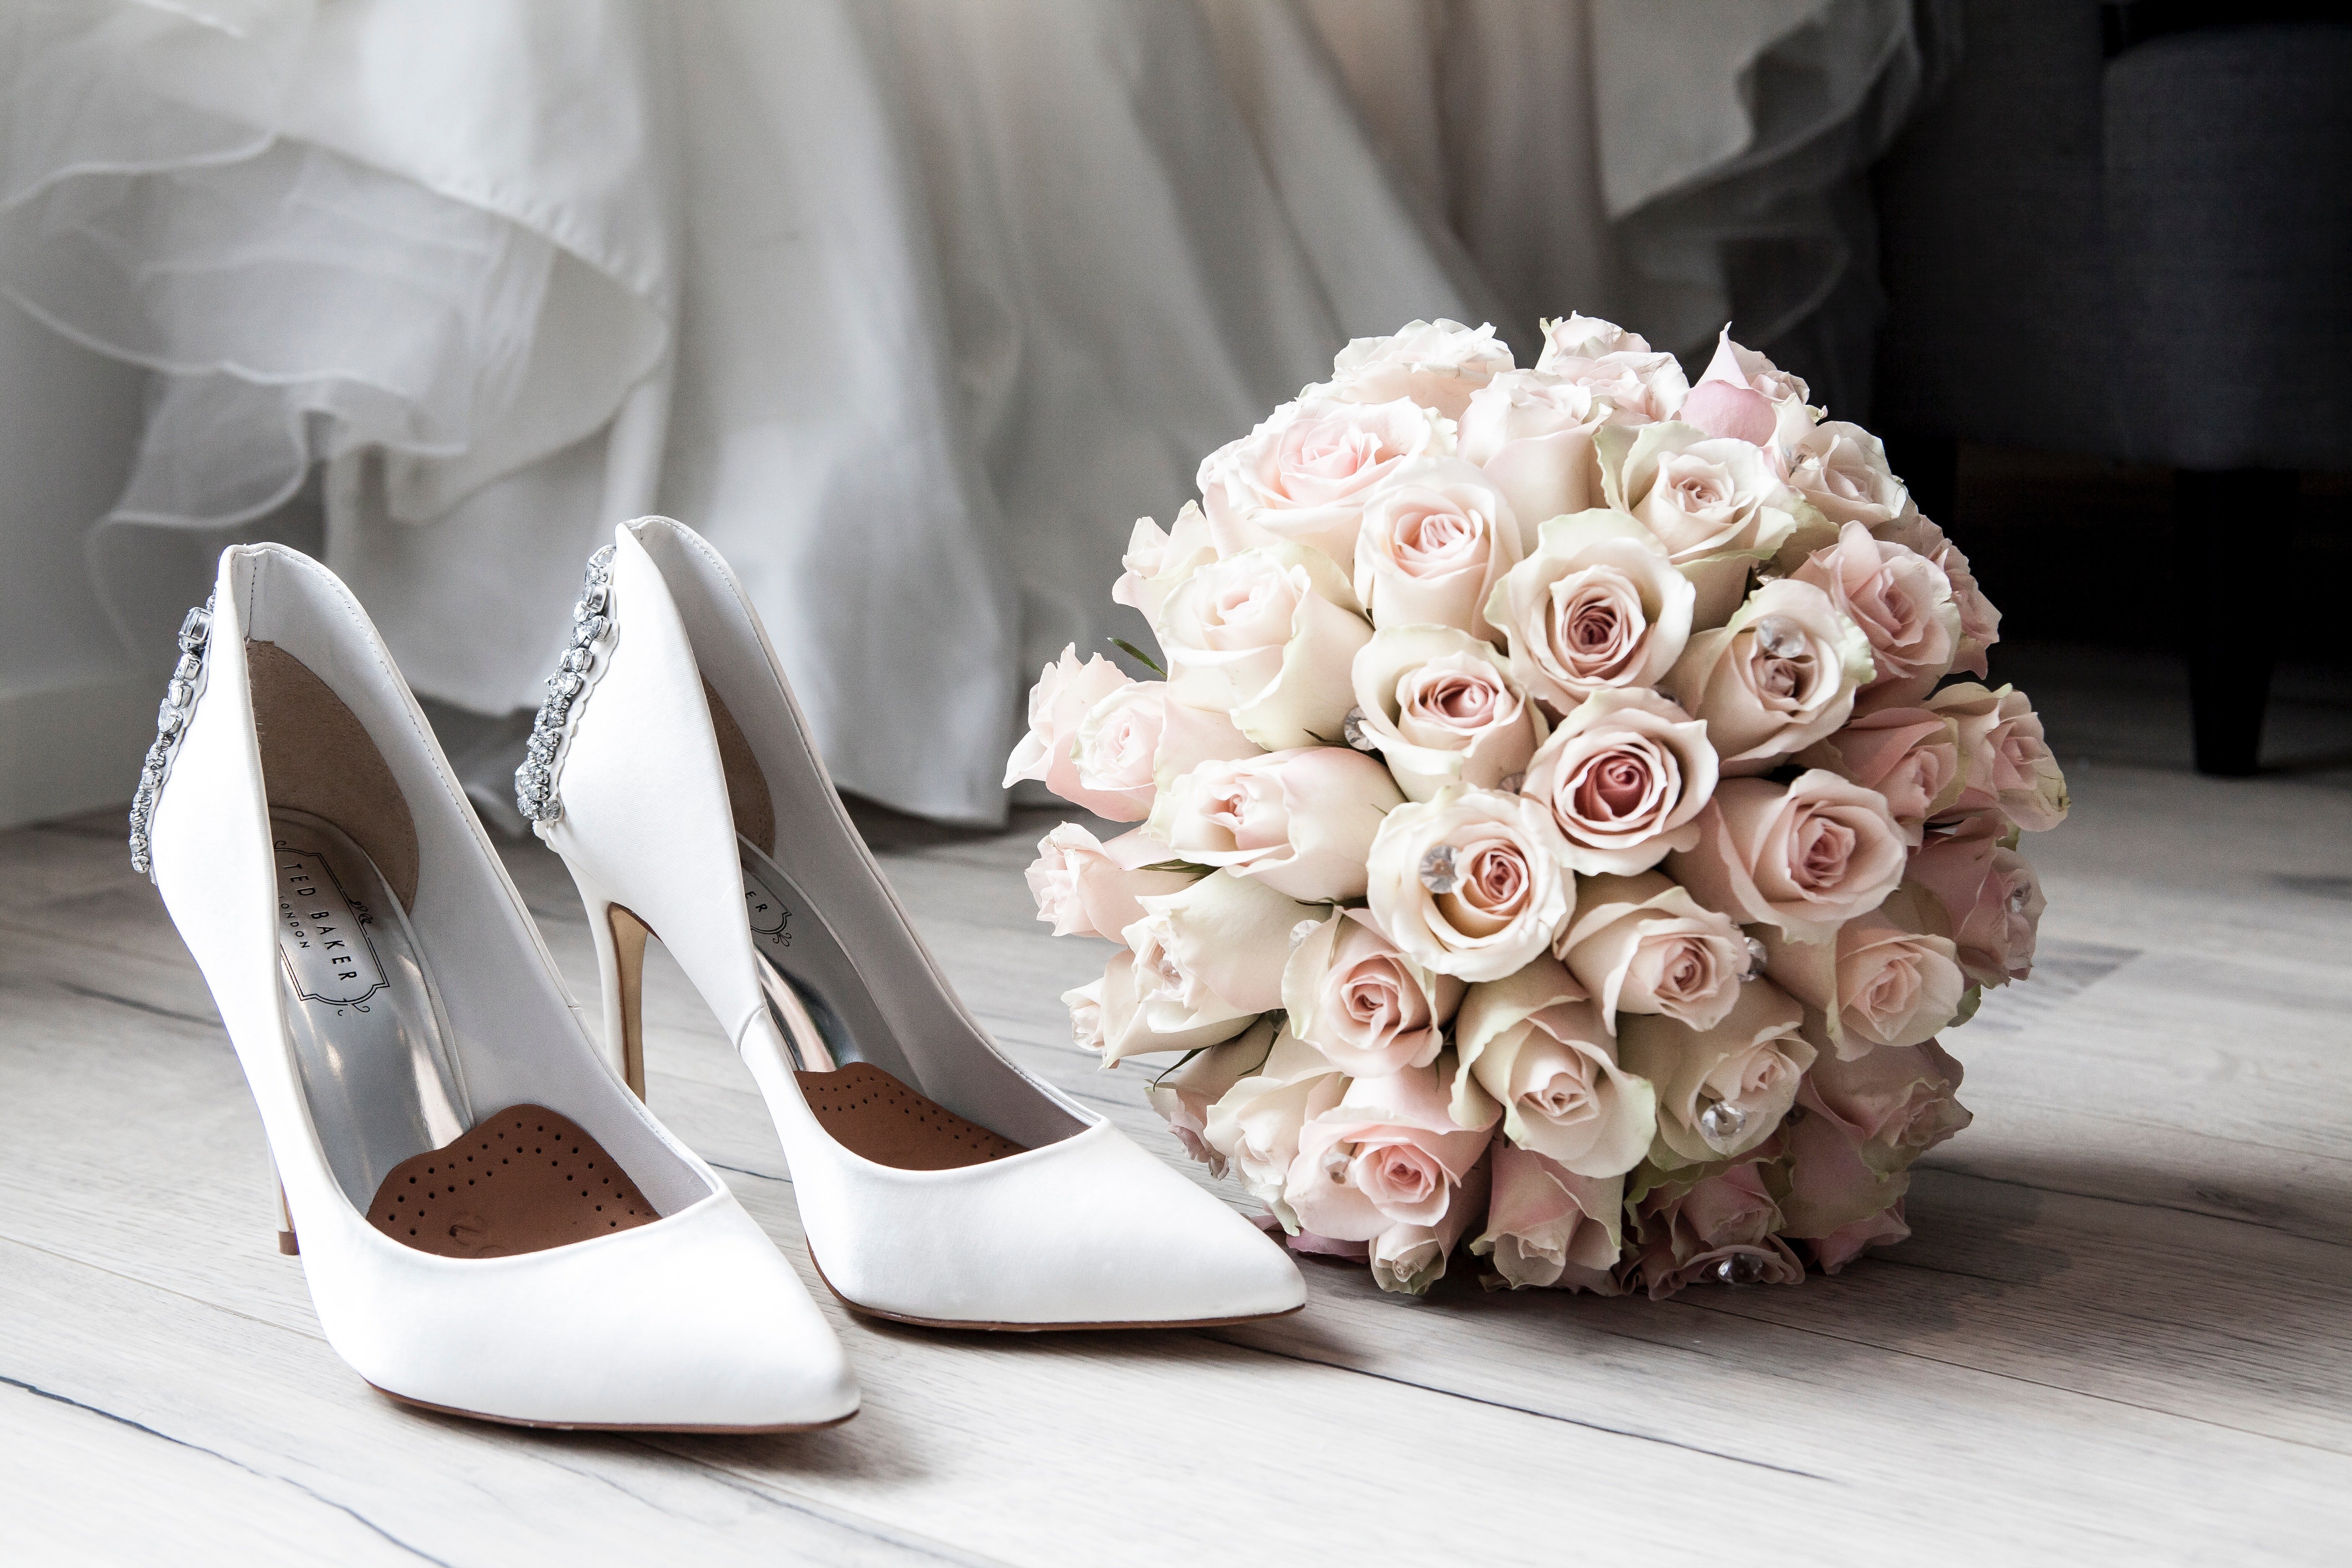 Marissa had always dreamt of having the perfect wedding. | Source: Pexels